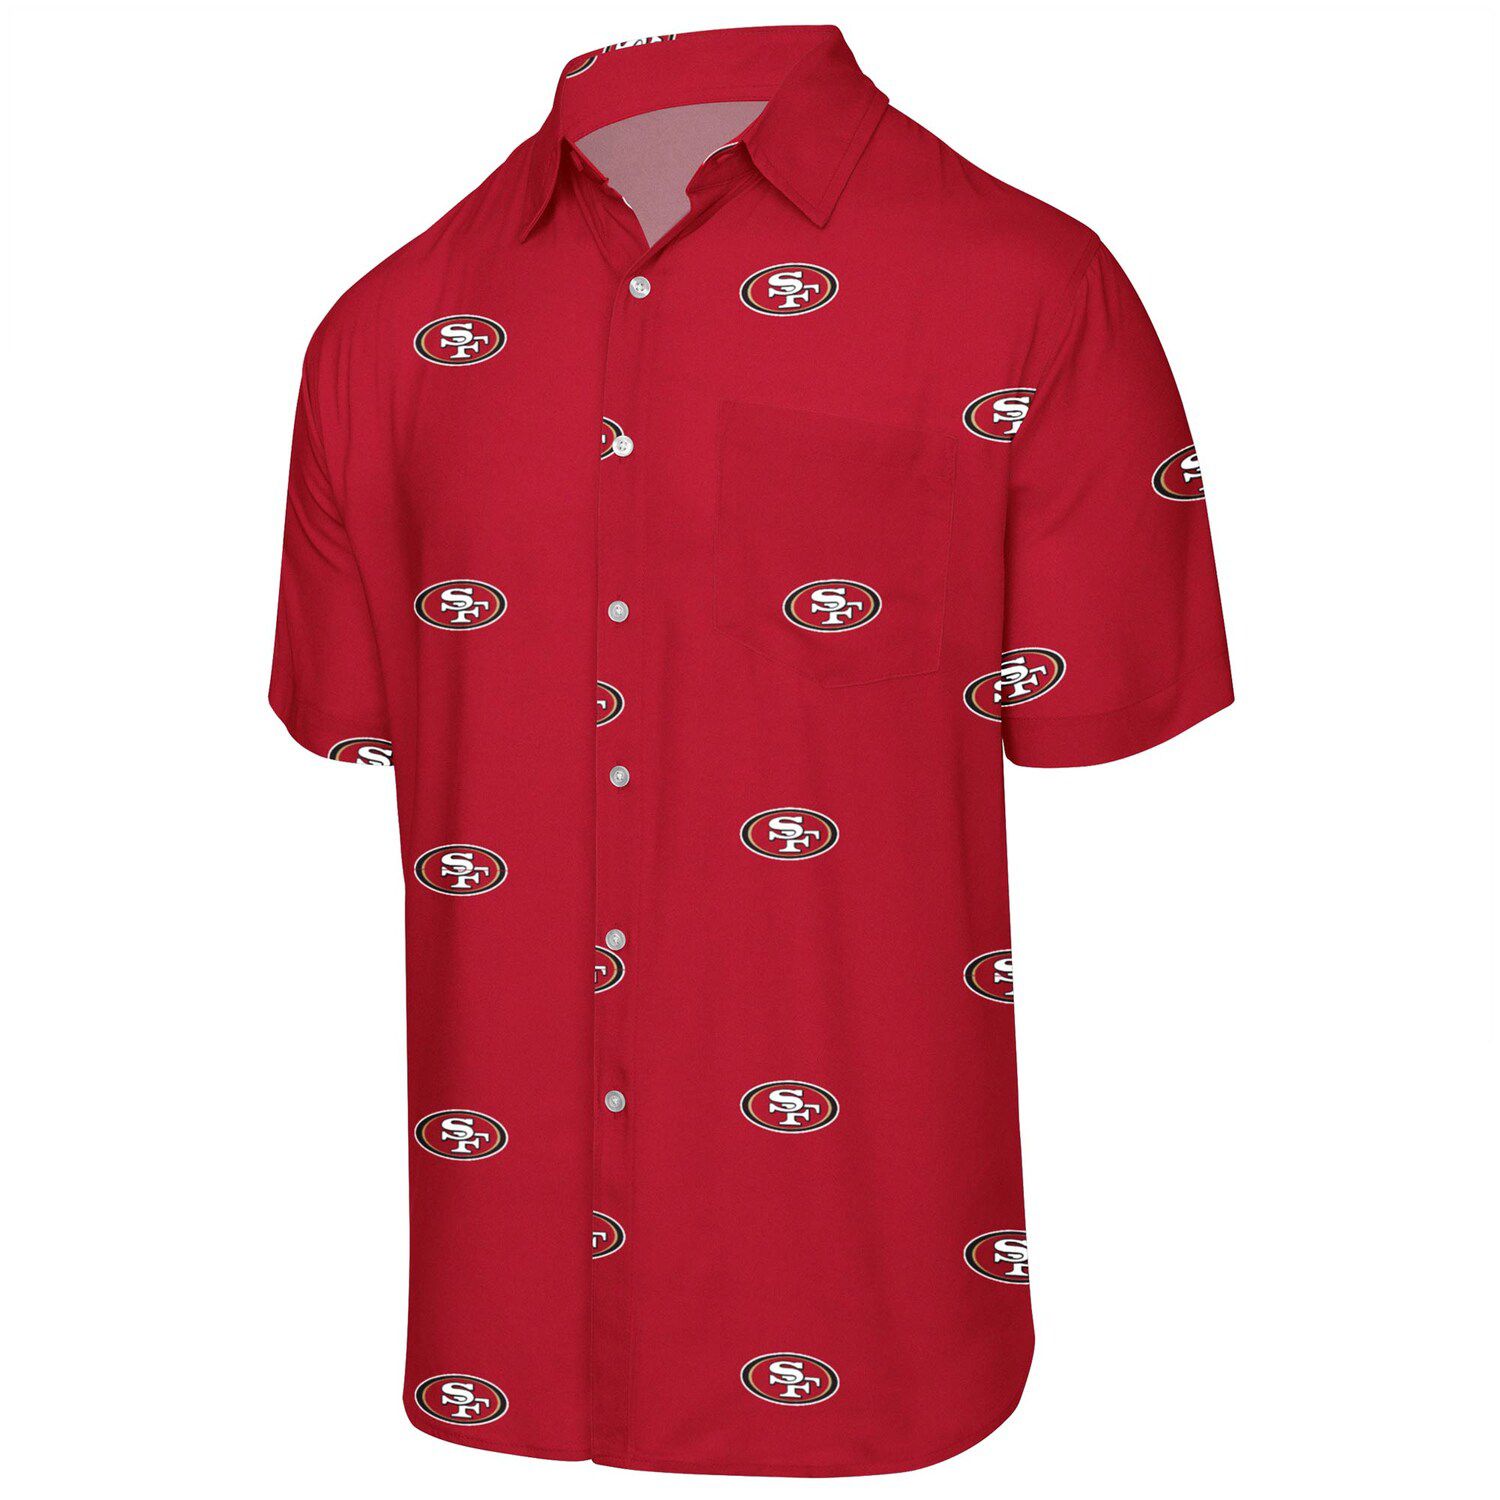 49ers button up jersey